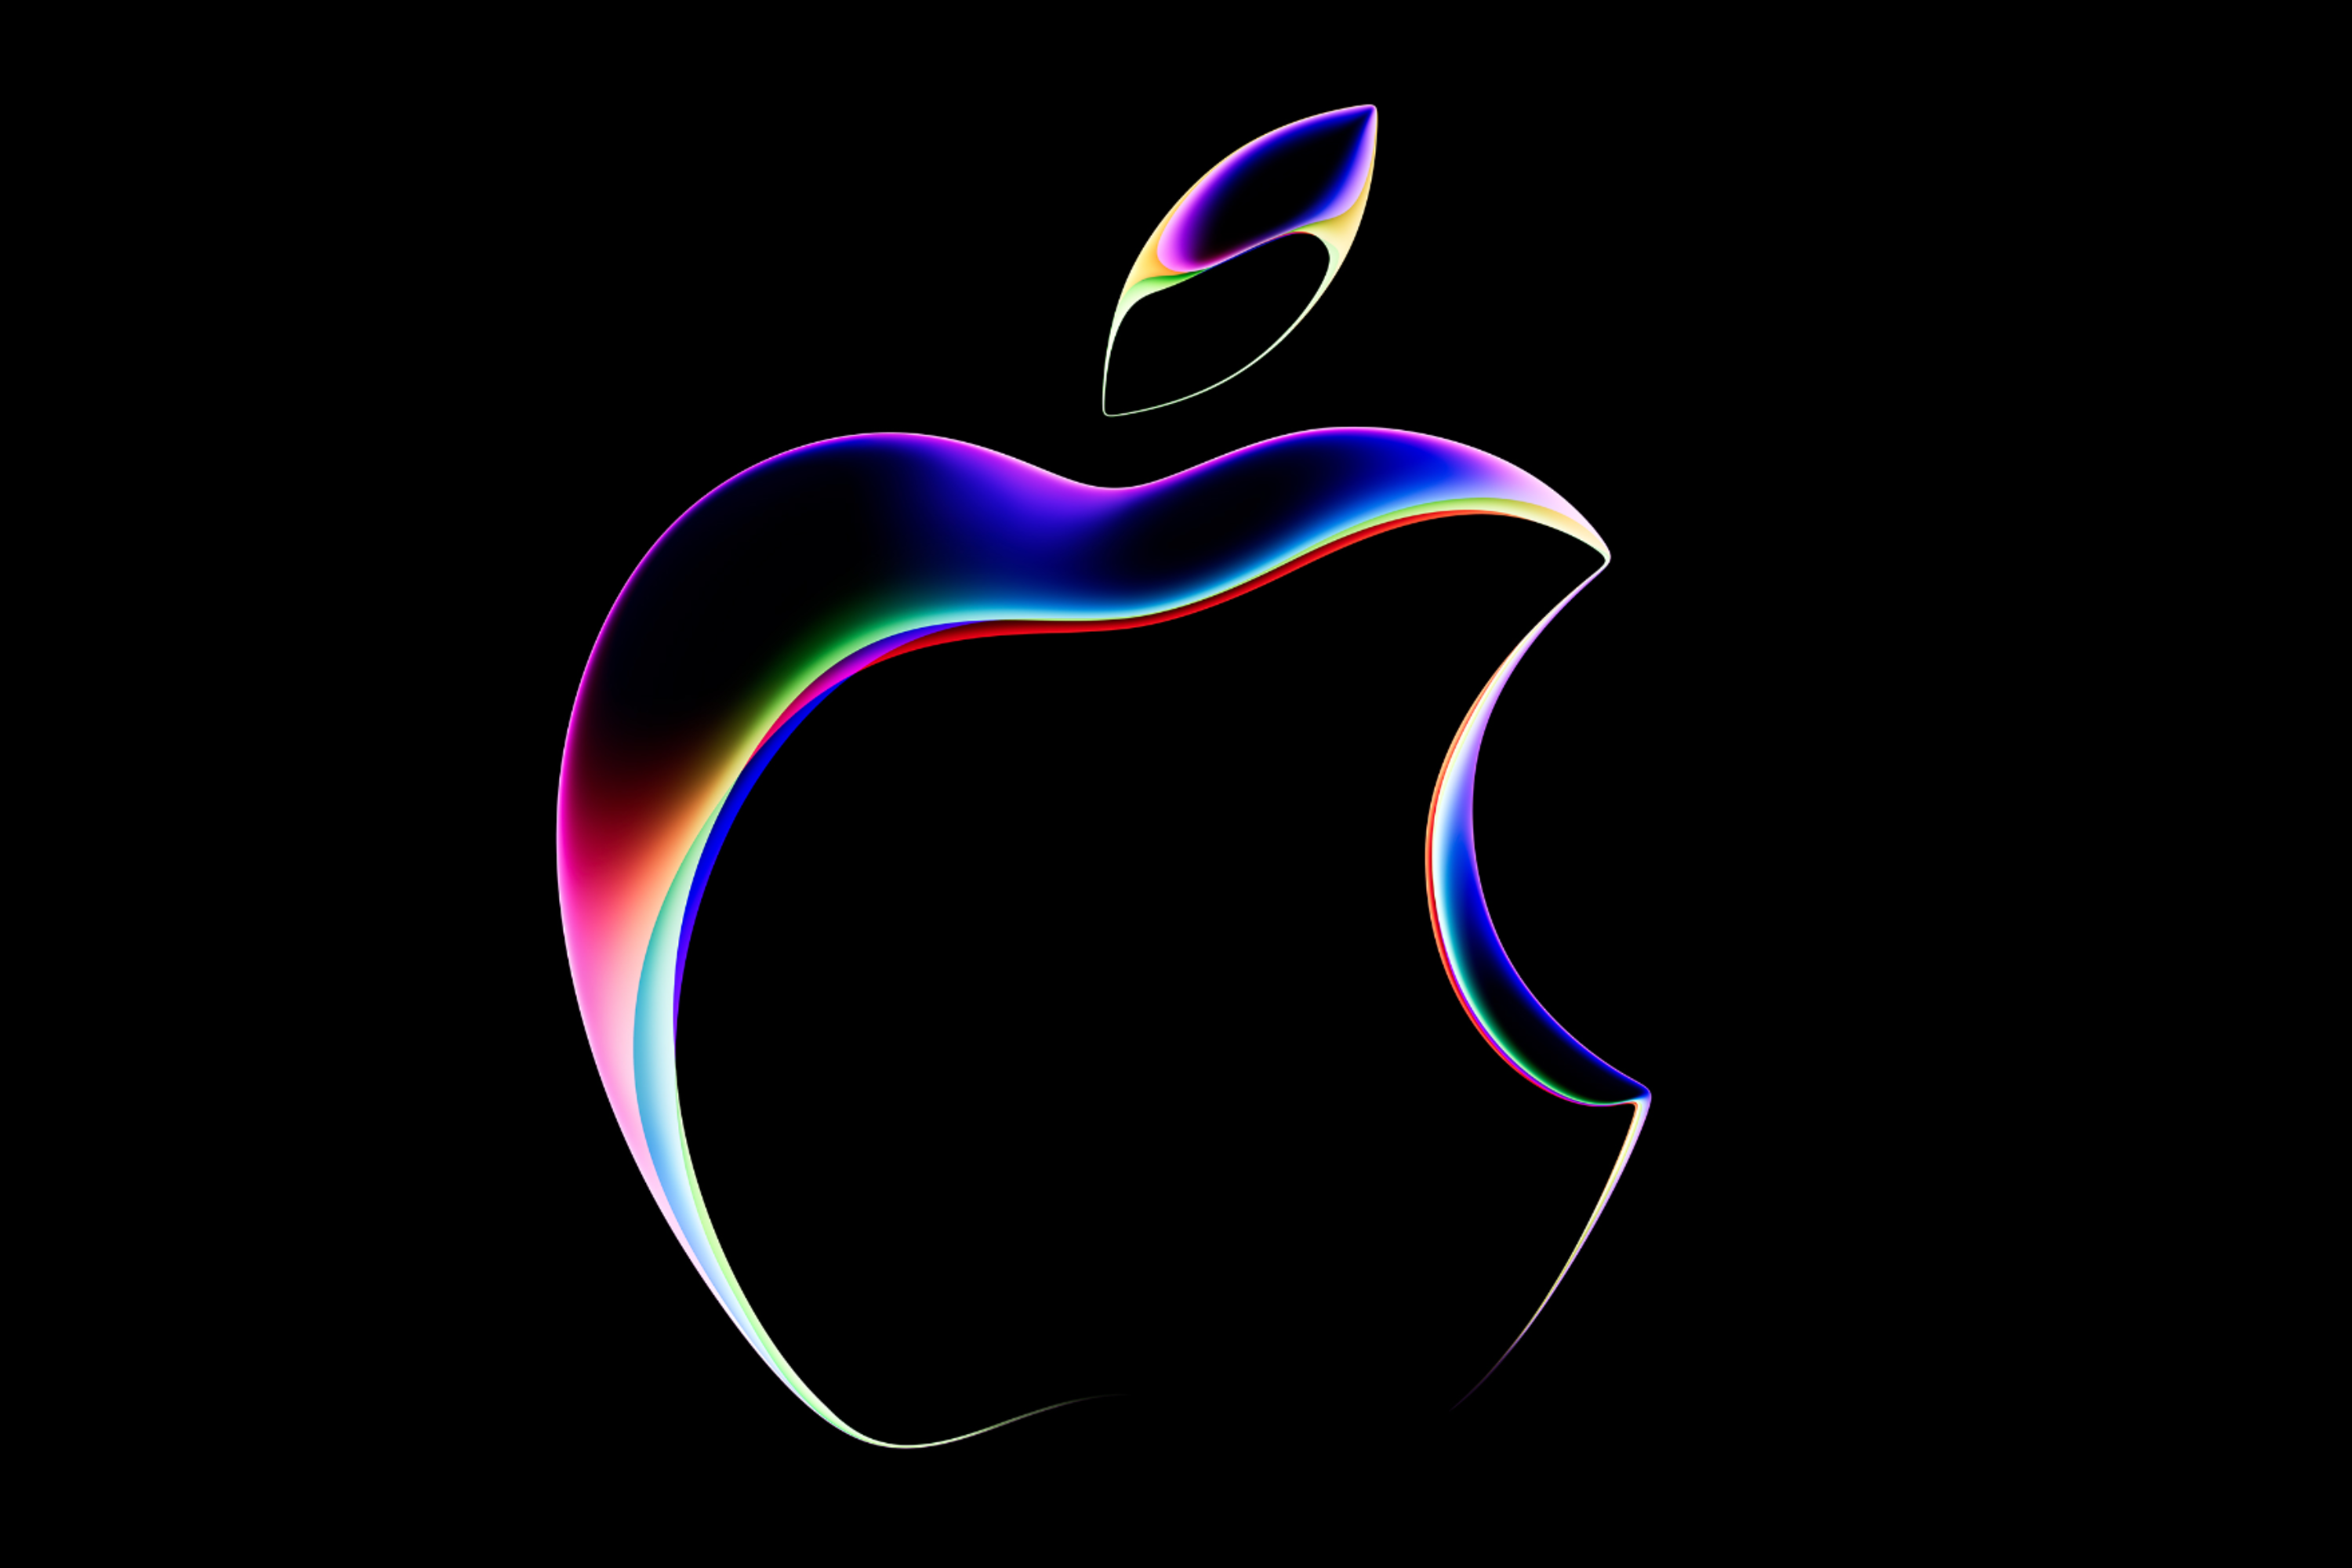 Логотип Apple WWDC23 со светоотражающими цветами и радужным оттенком на черном фоне